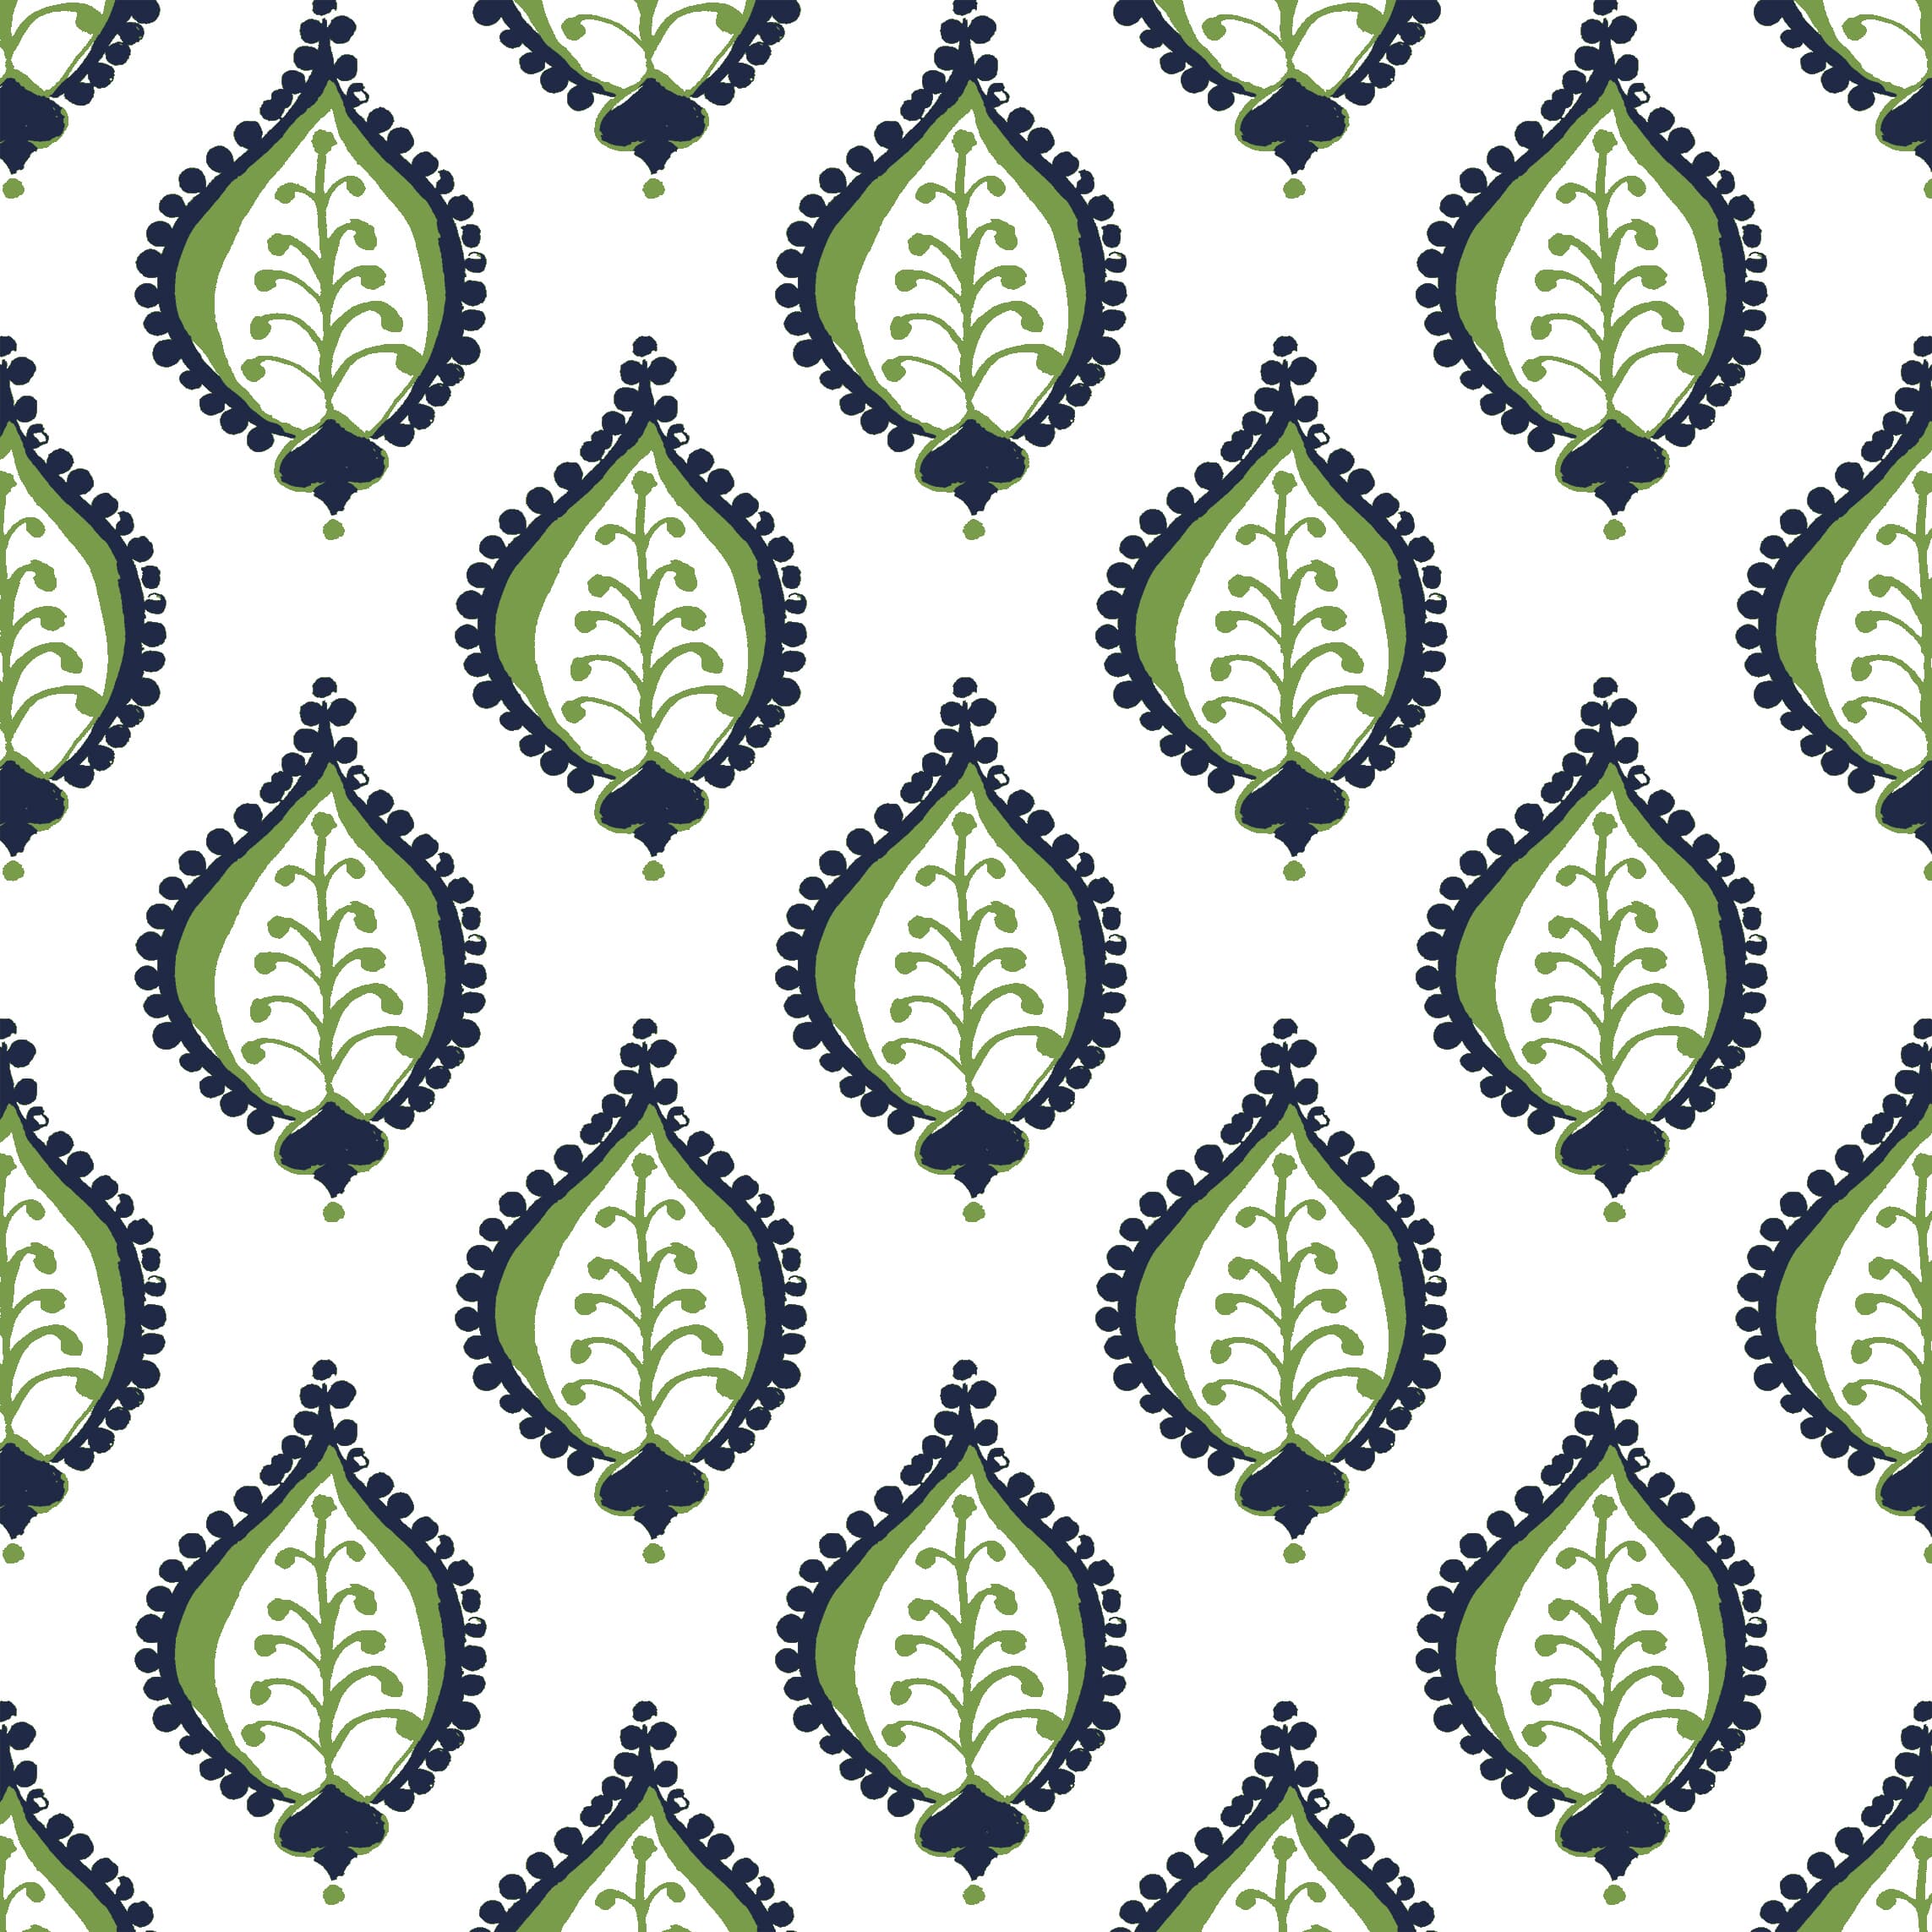 W04vl-2 Gentle Grass Wallpaper by Stout Fabric